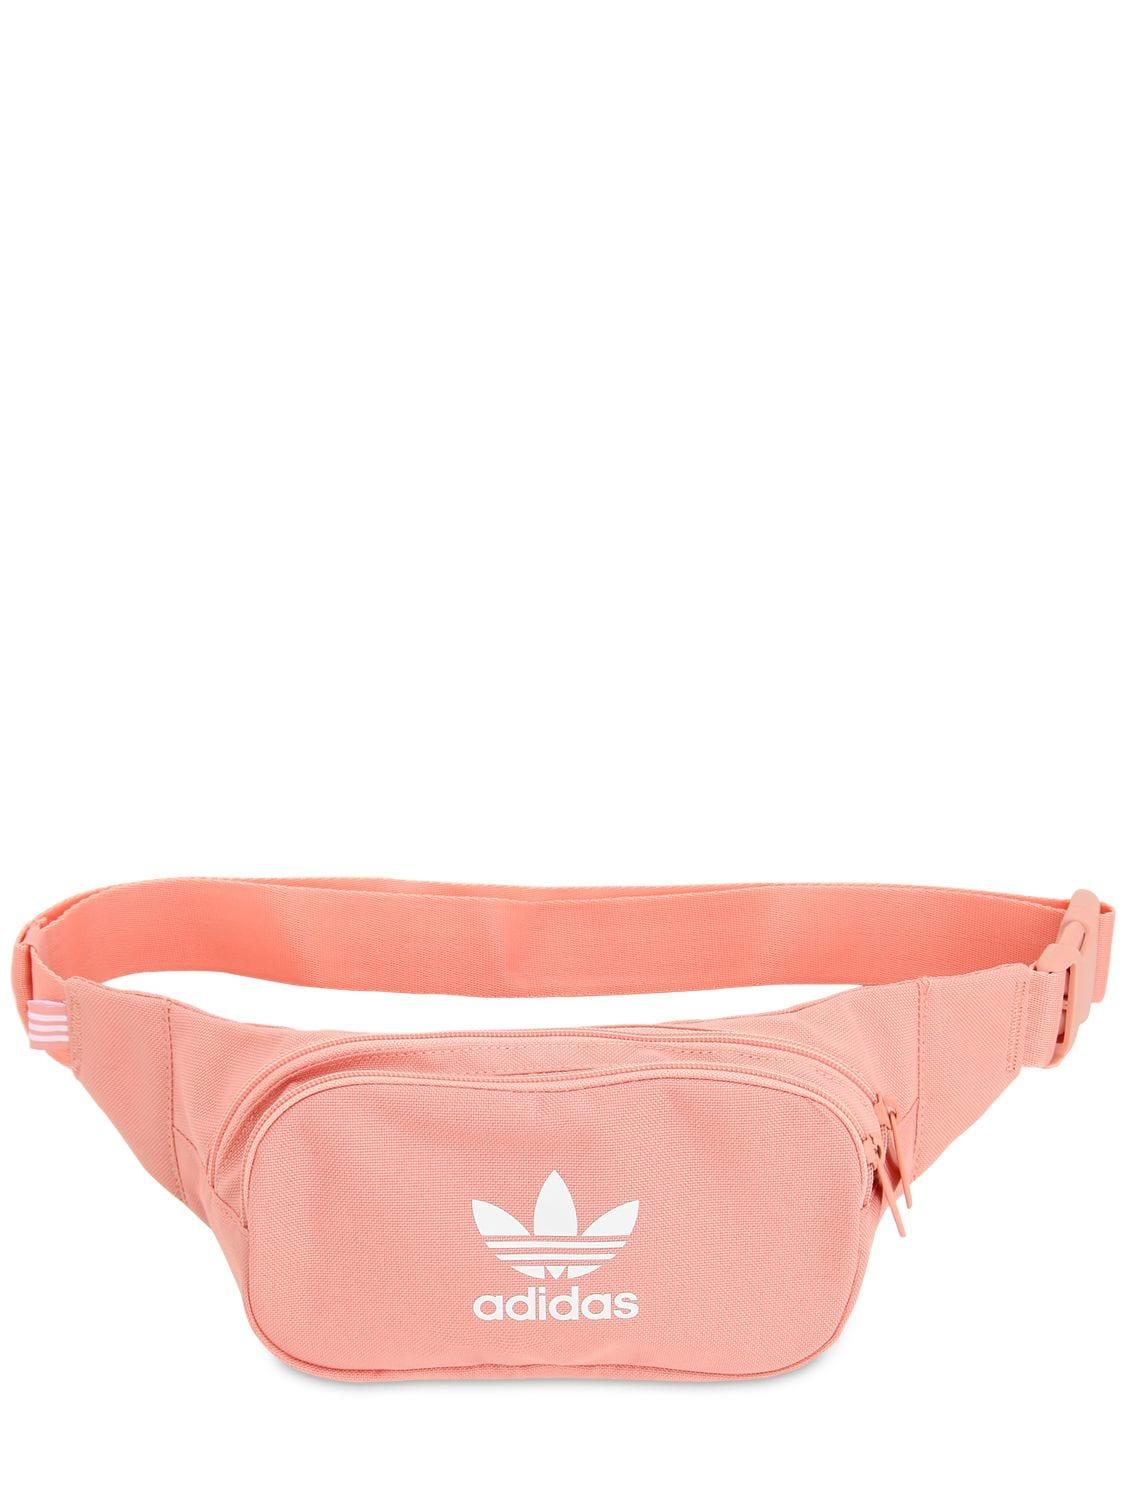 adidas Originals Adicolor Techno Belt Bag in Pink - Lyst